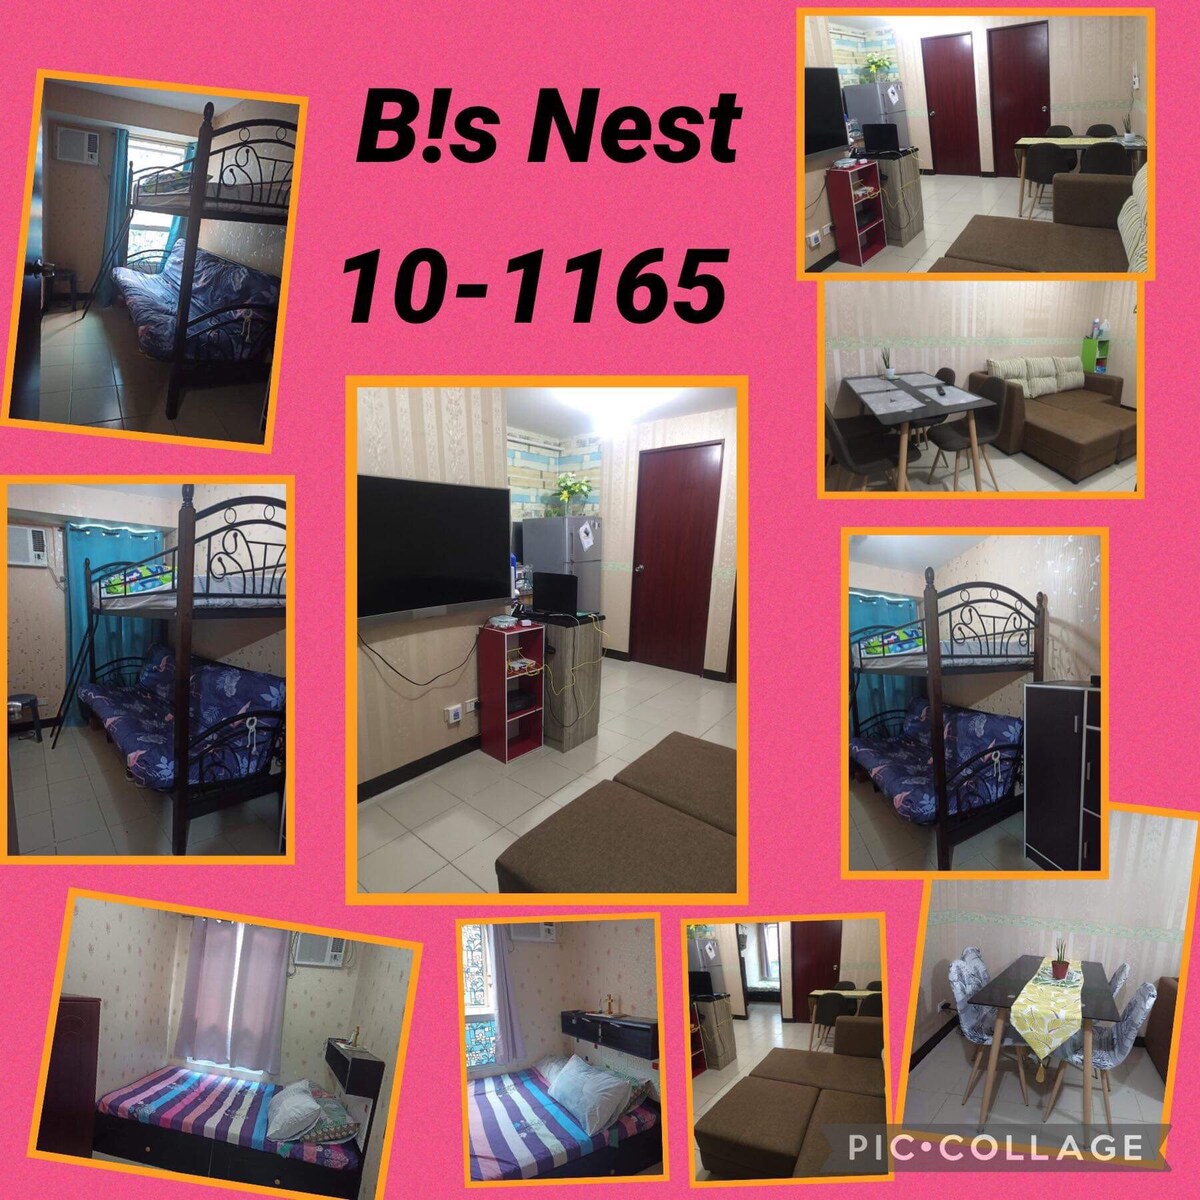 B! s Nest @ 10-1165